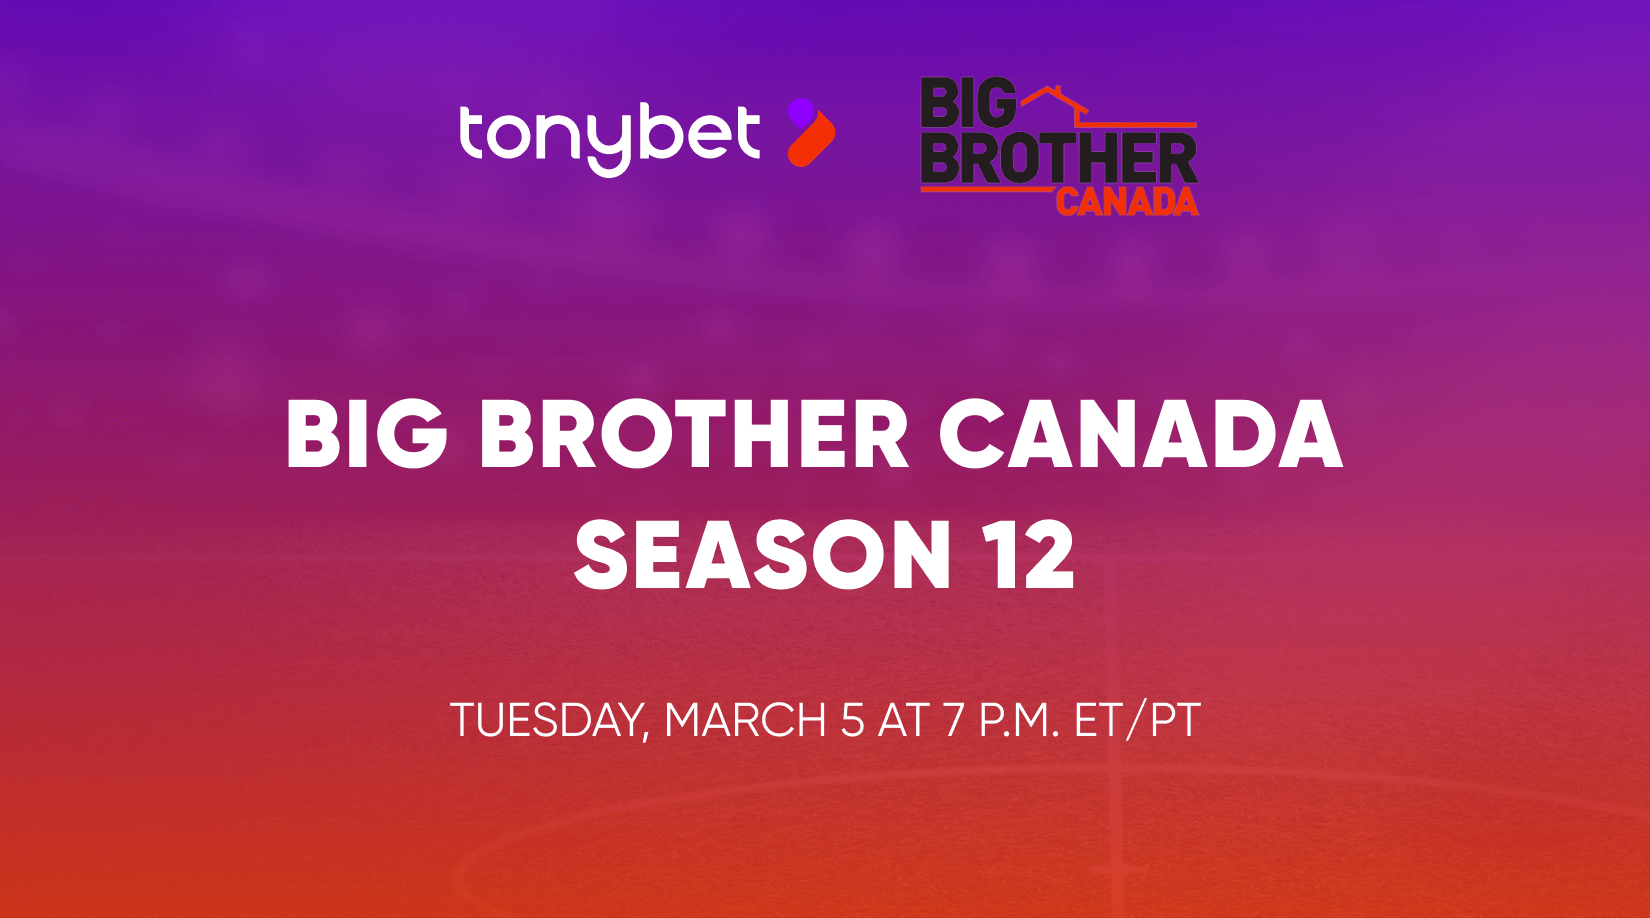 Big Brother Canada Returns for Season 12